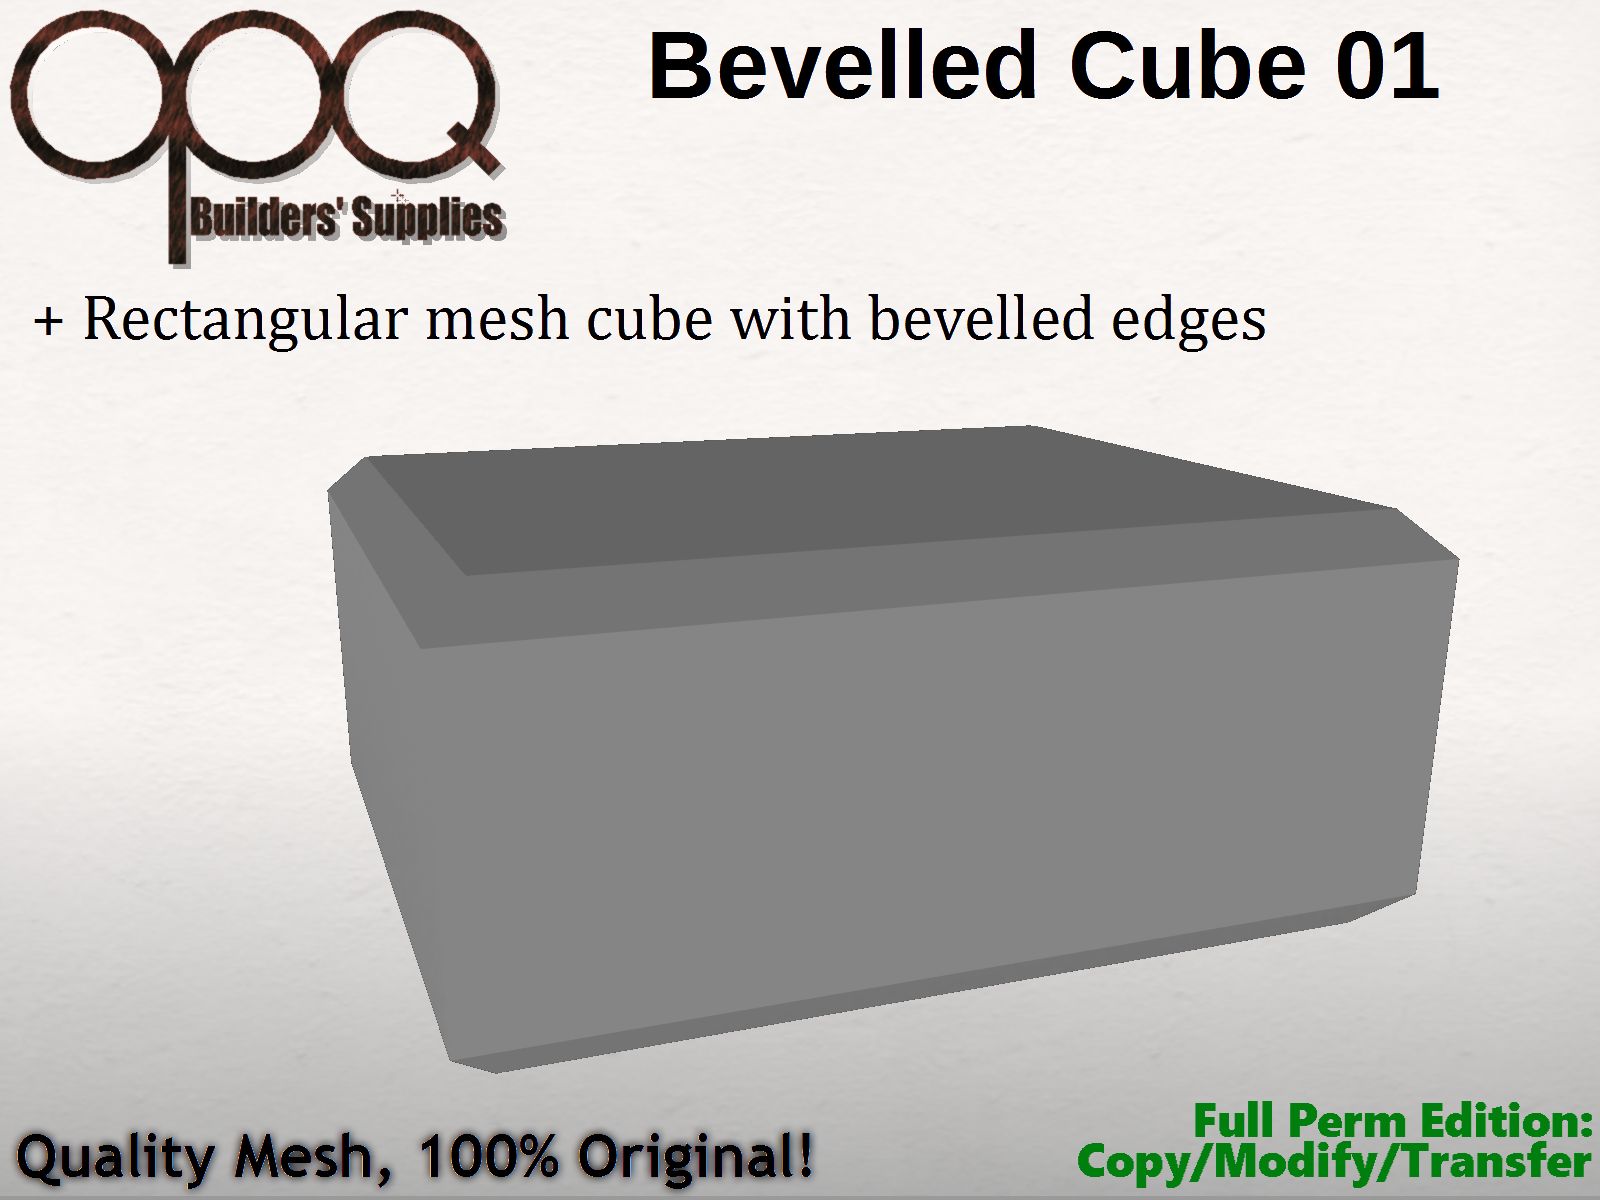 OPQ Bevelled Cube 01 Poster.jpg